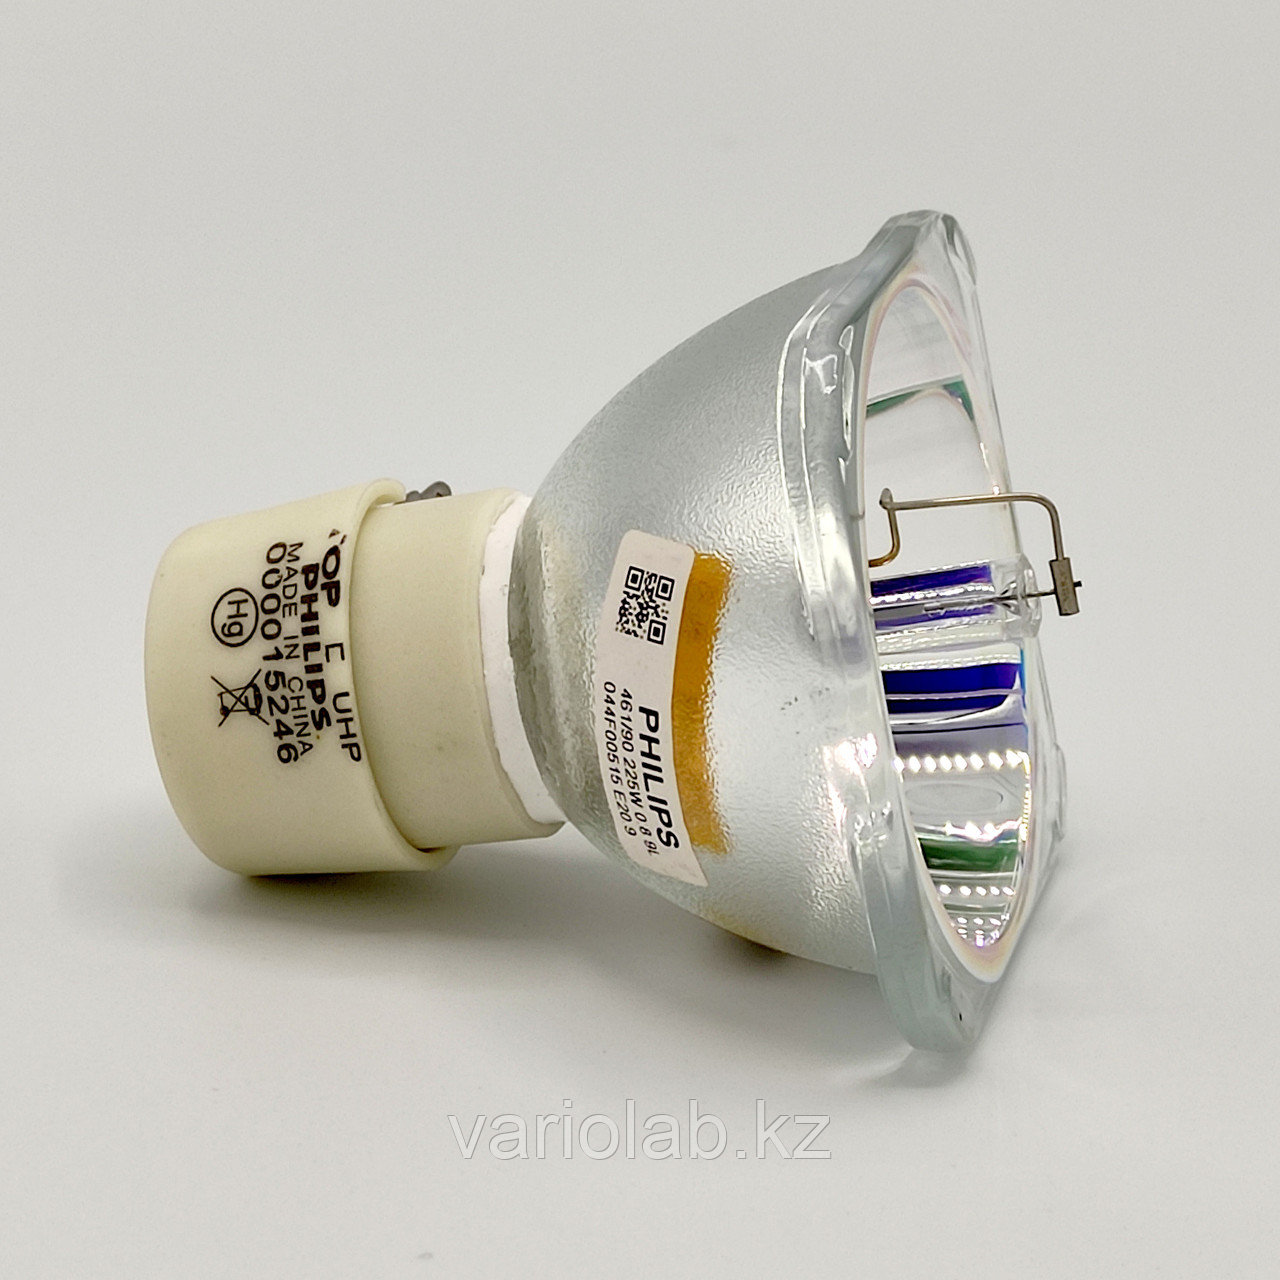 Лампа для проектора, Philips 230W. Оригинал!